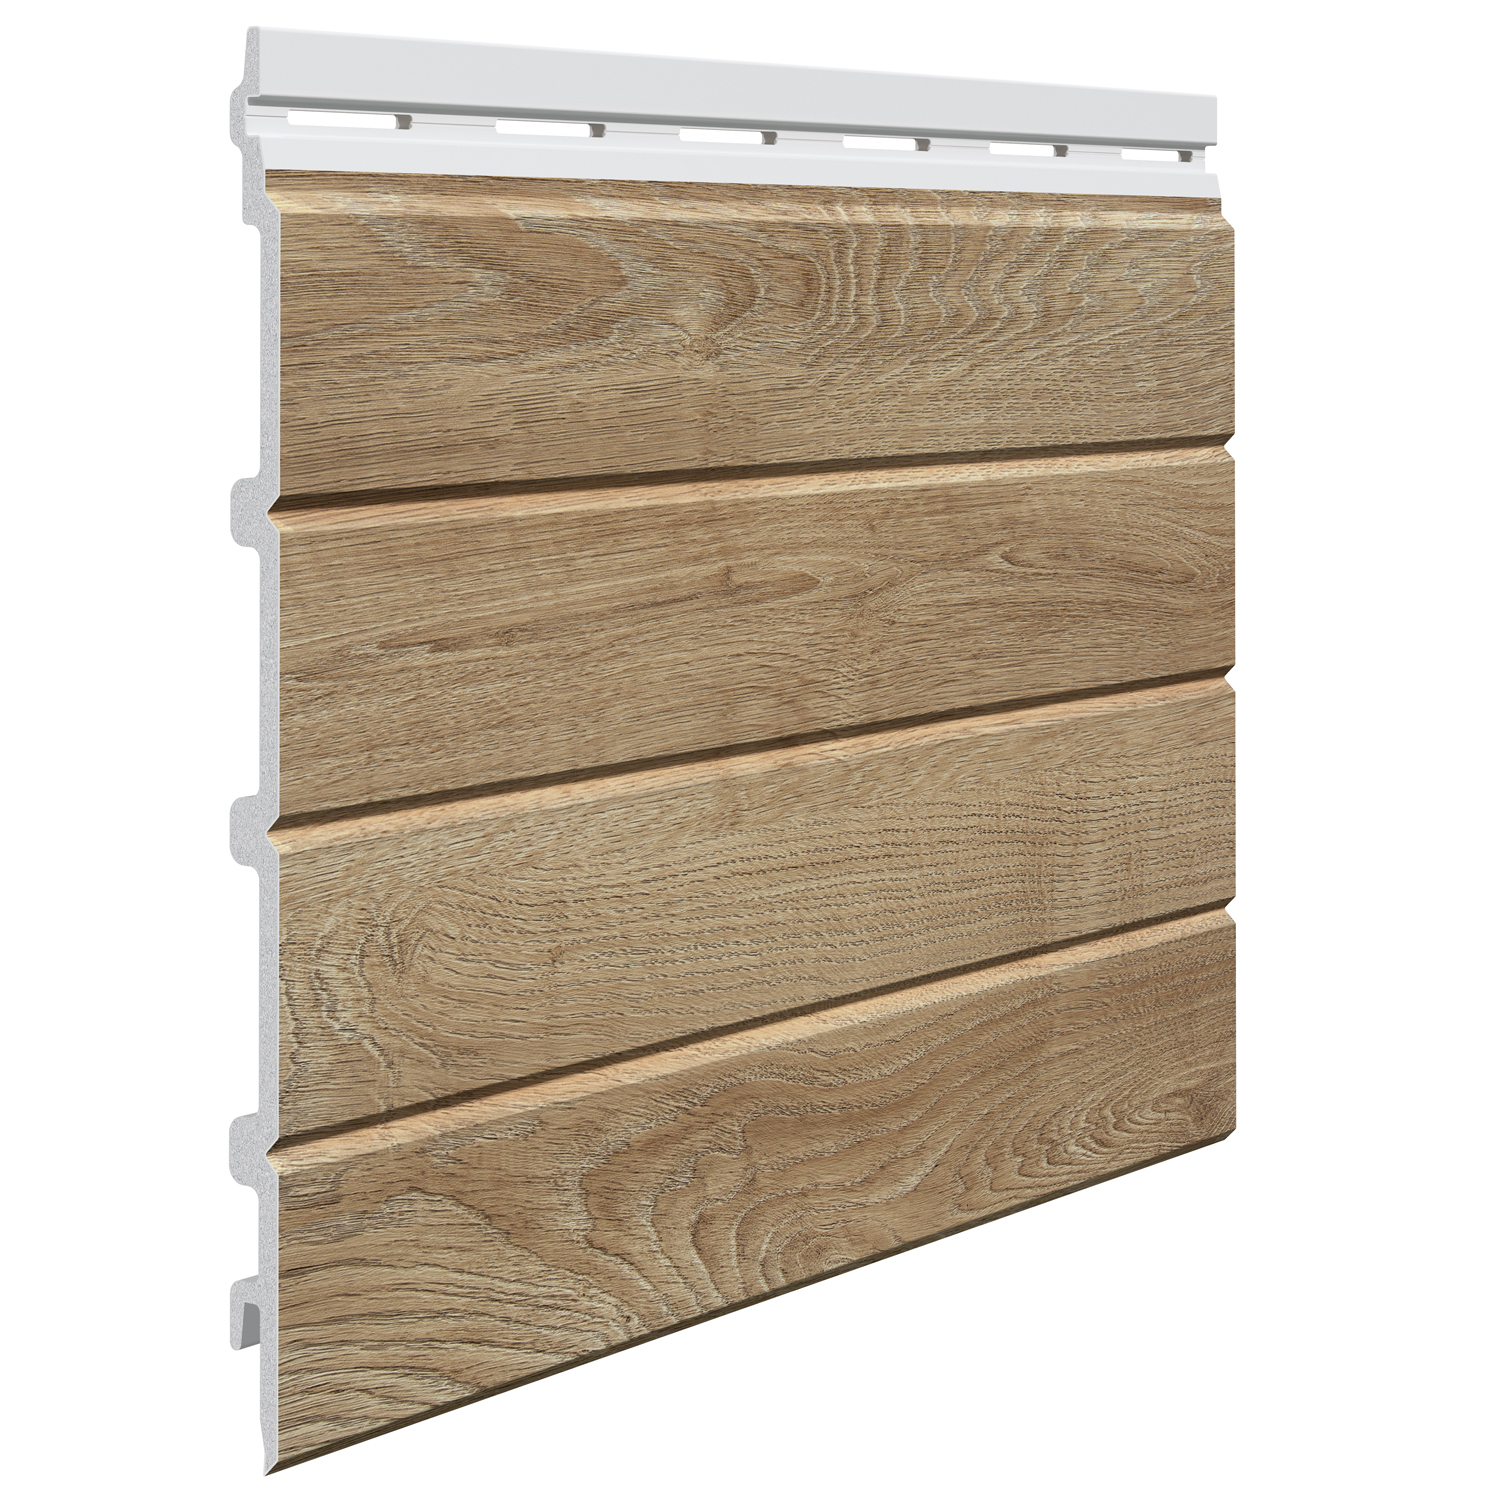 Facade cladding, Kerrafront, Wood Effect, Malt Oak, fourfold panel